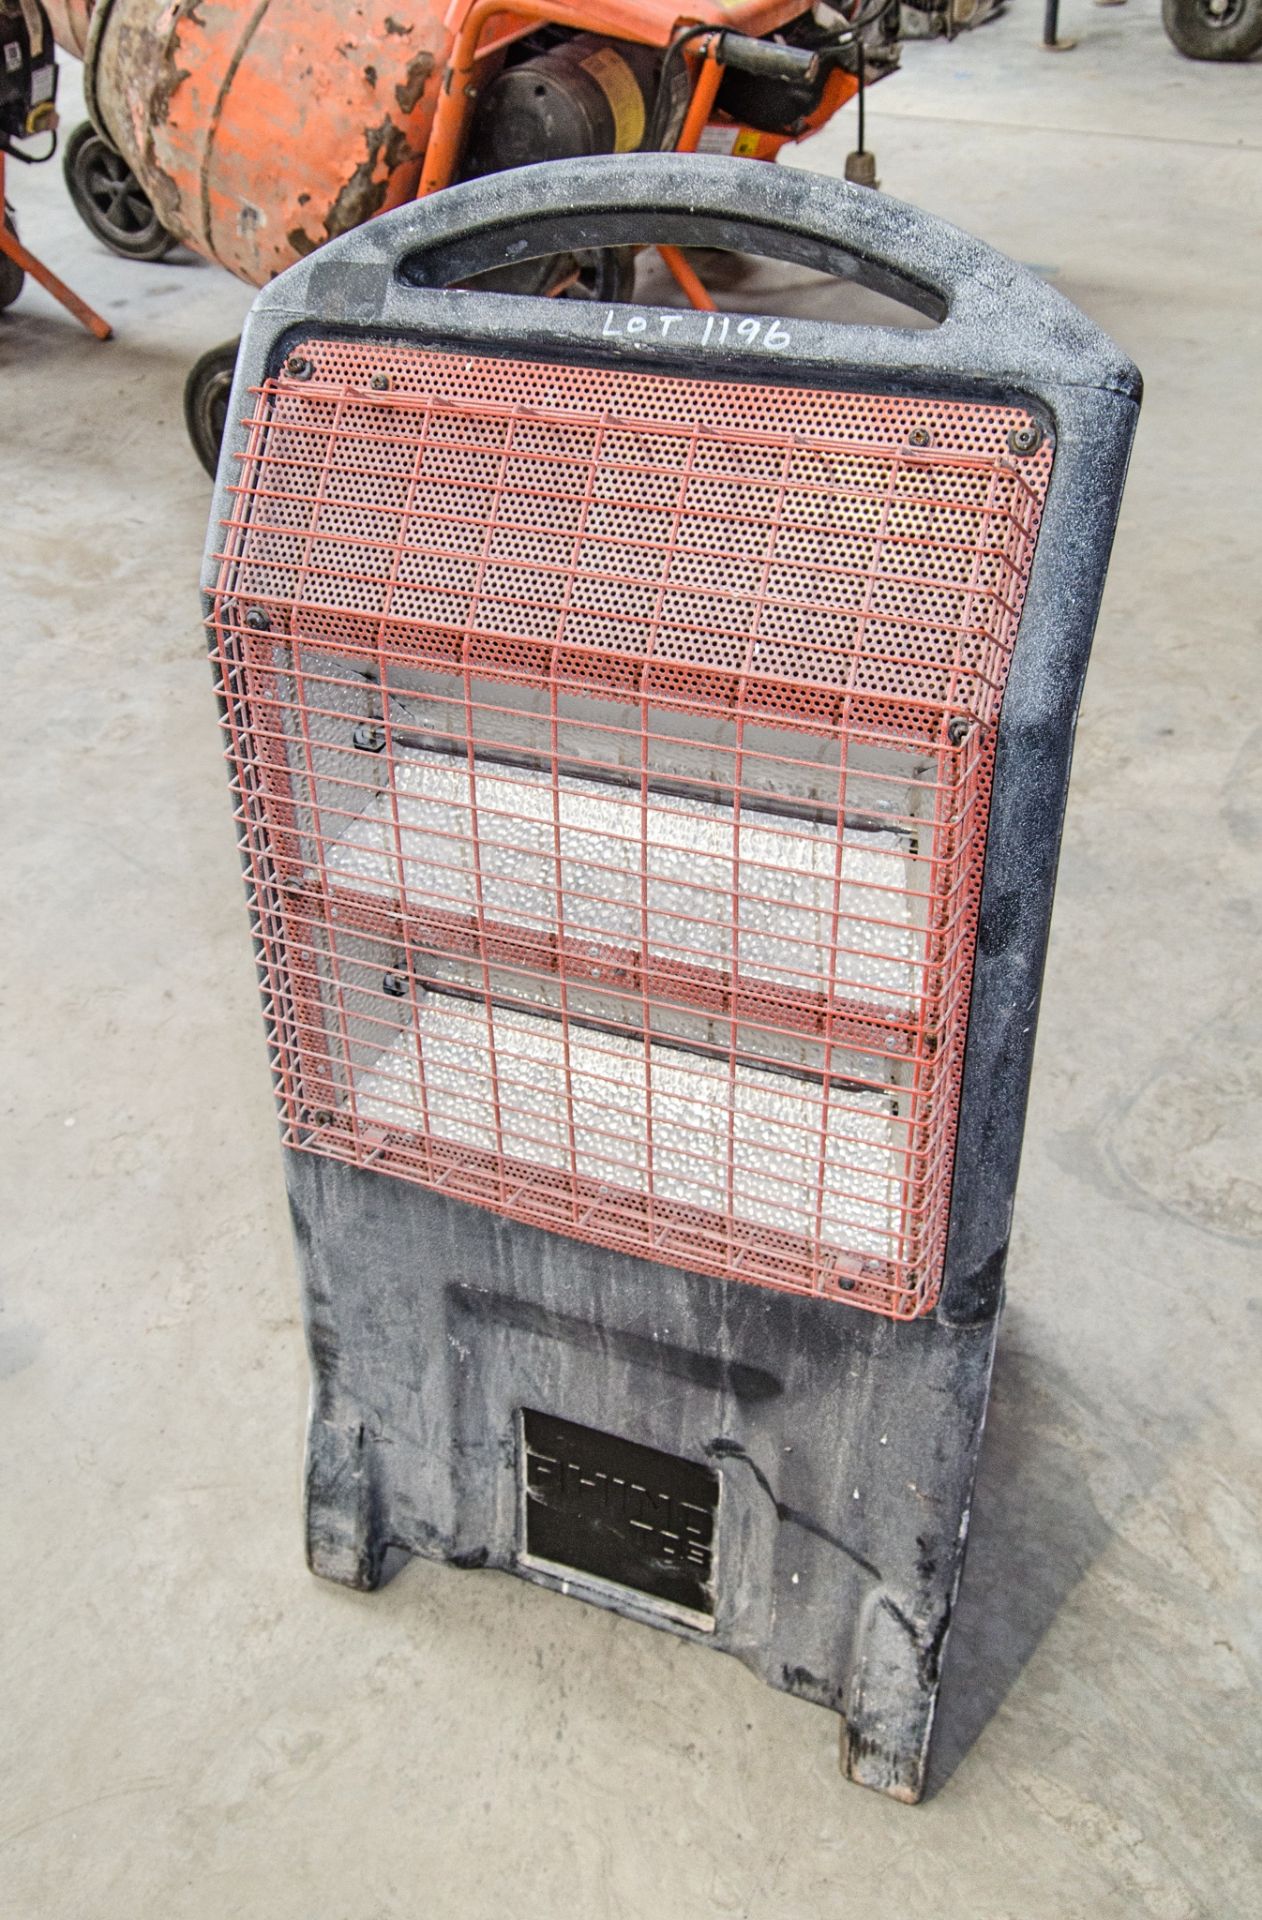 Rhino TQ3 110v infrared heater